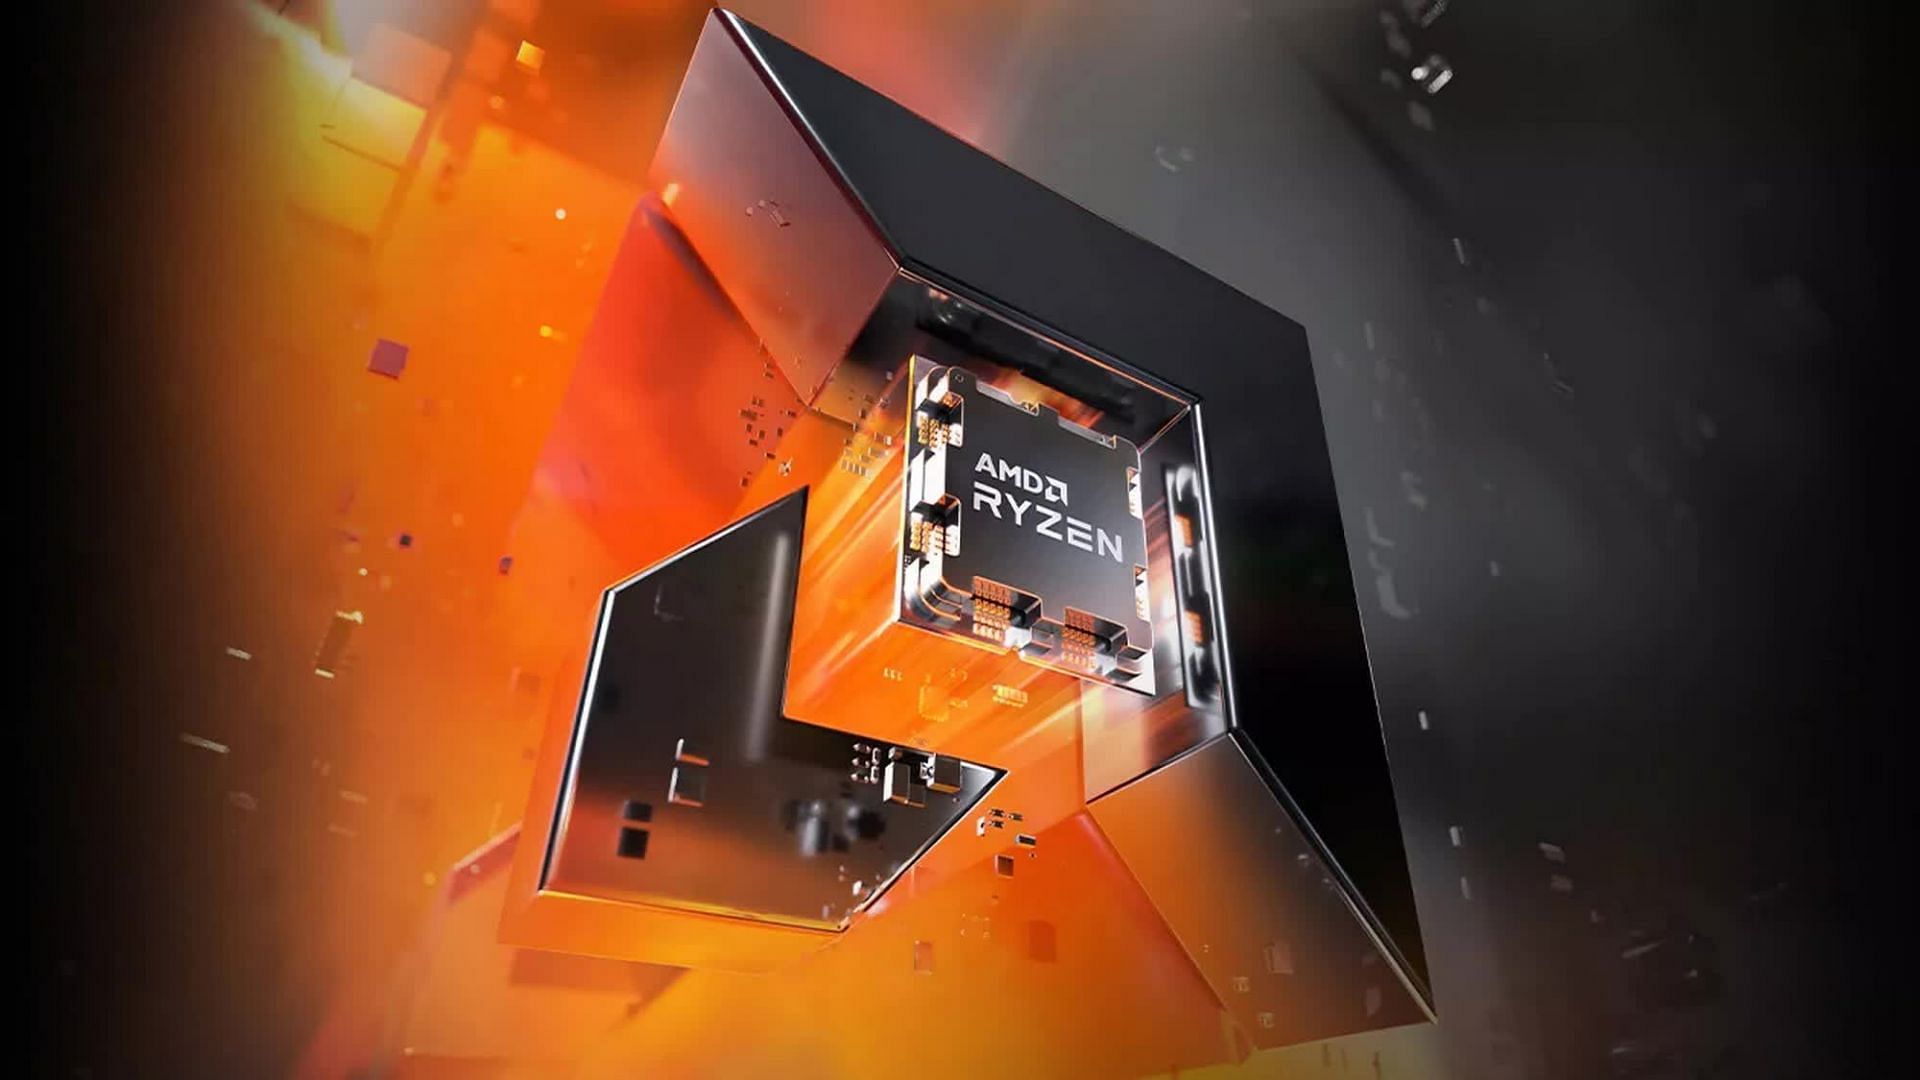 AMD Ryzen chip on black and orange background